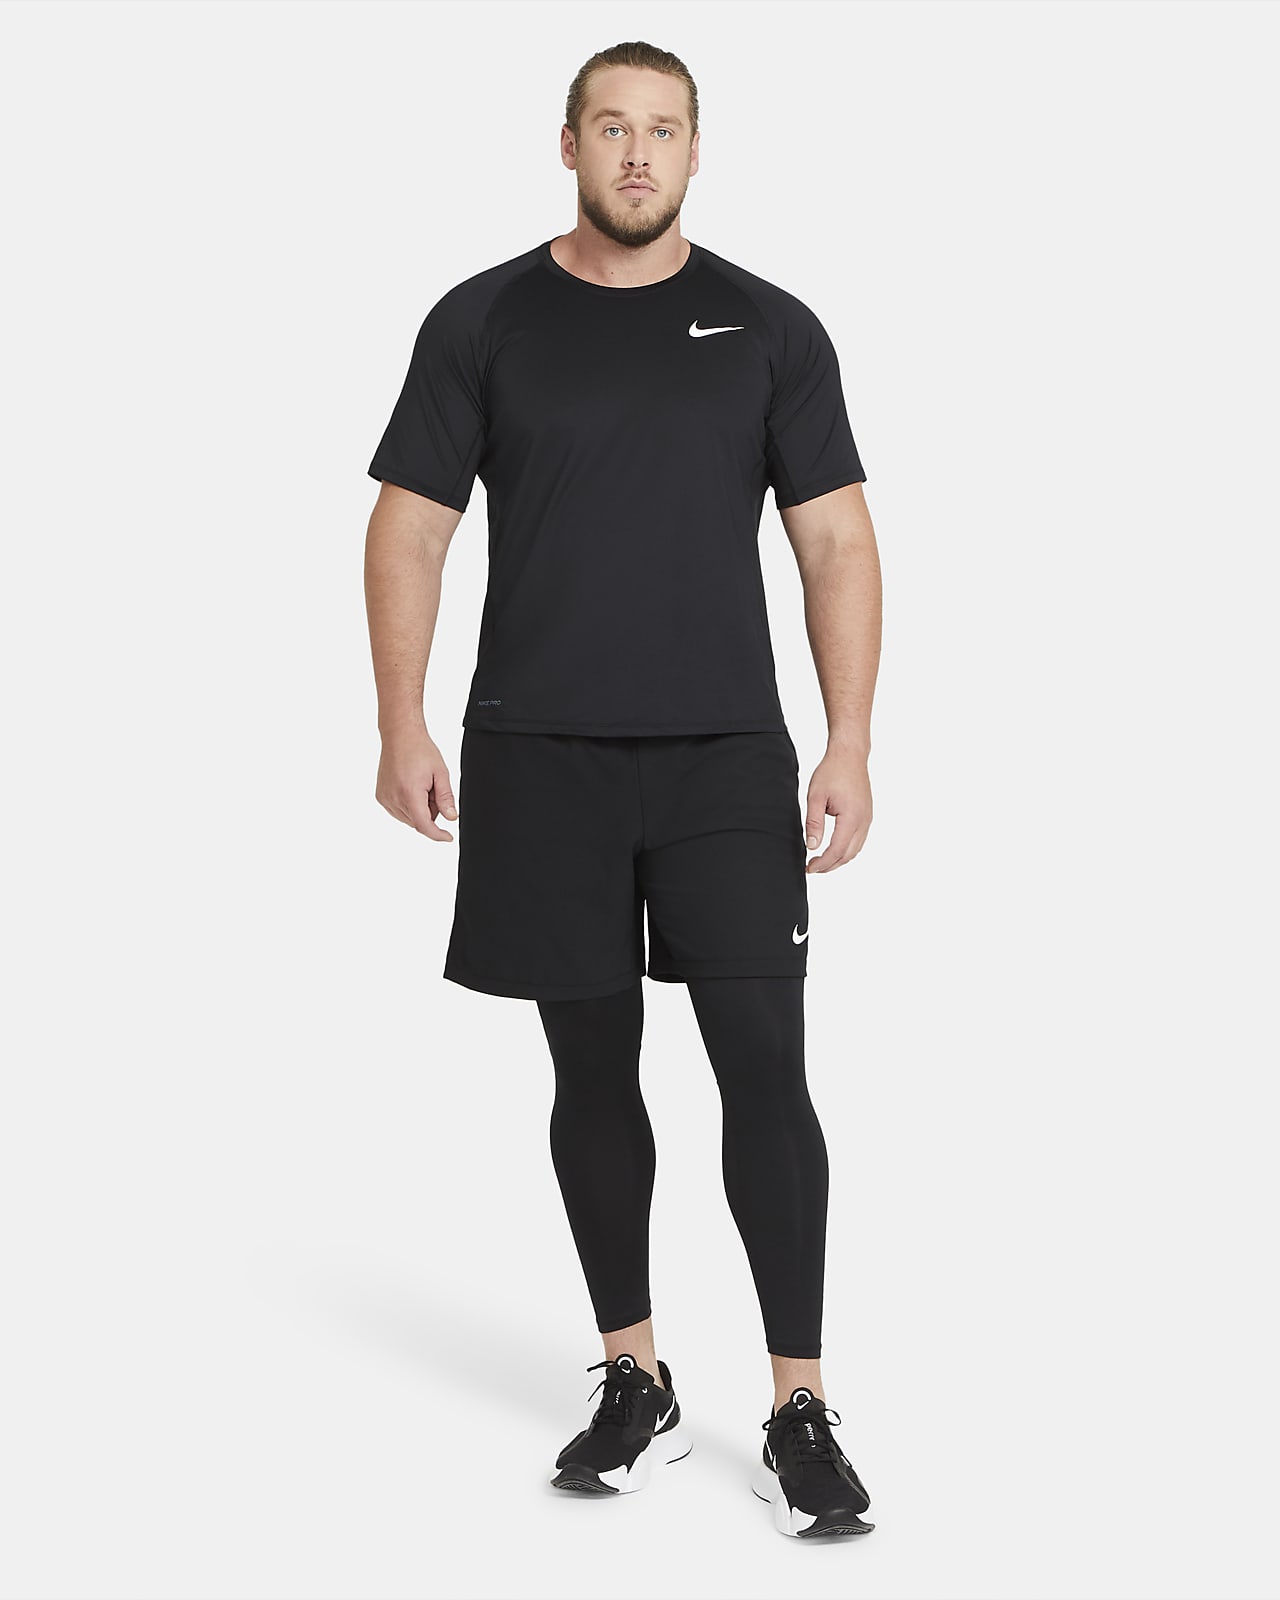 Nike Pro Men's Tights